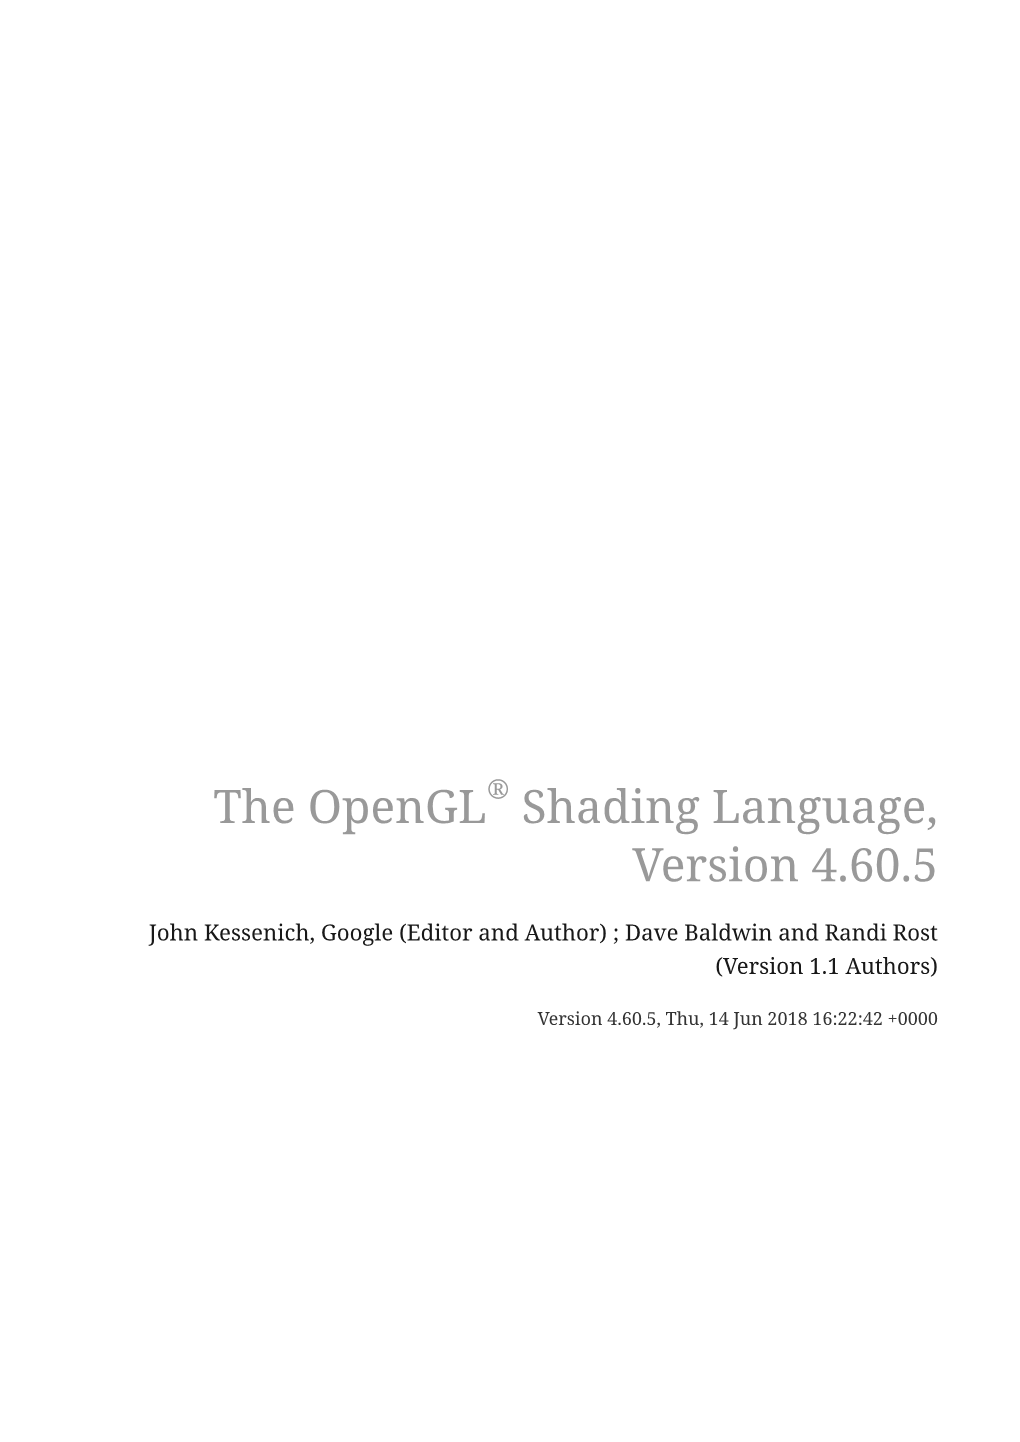 The Opengl® Shading Language, Version 4.60.5